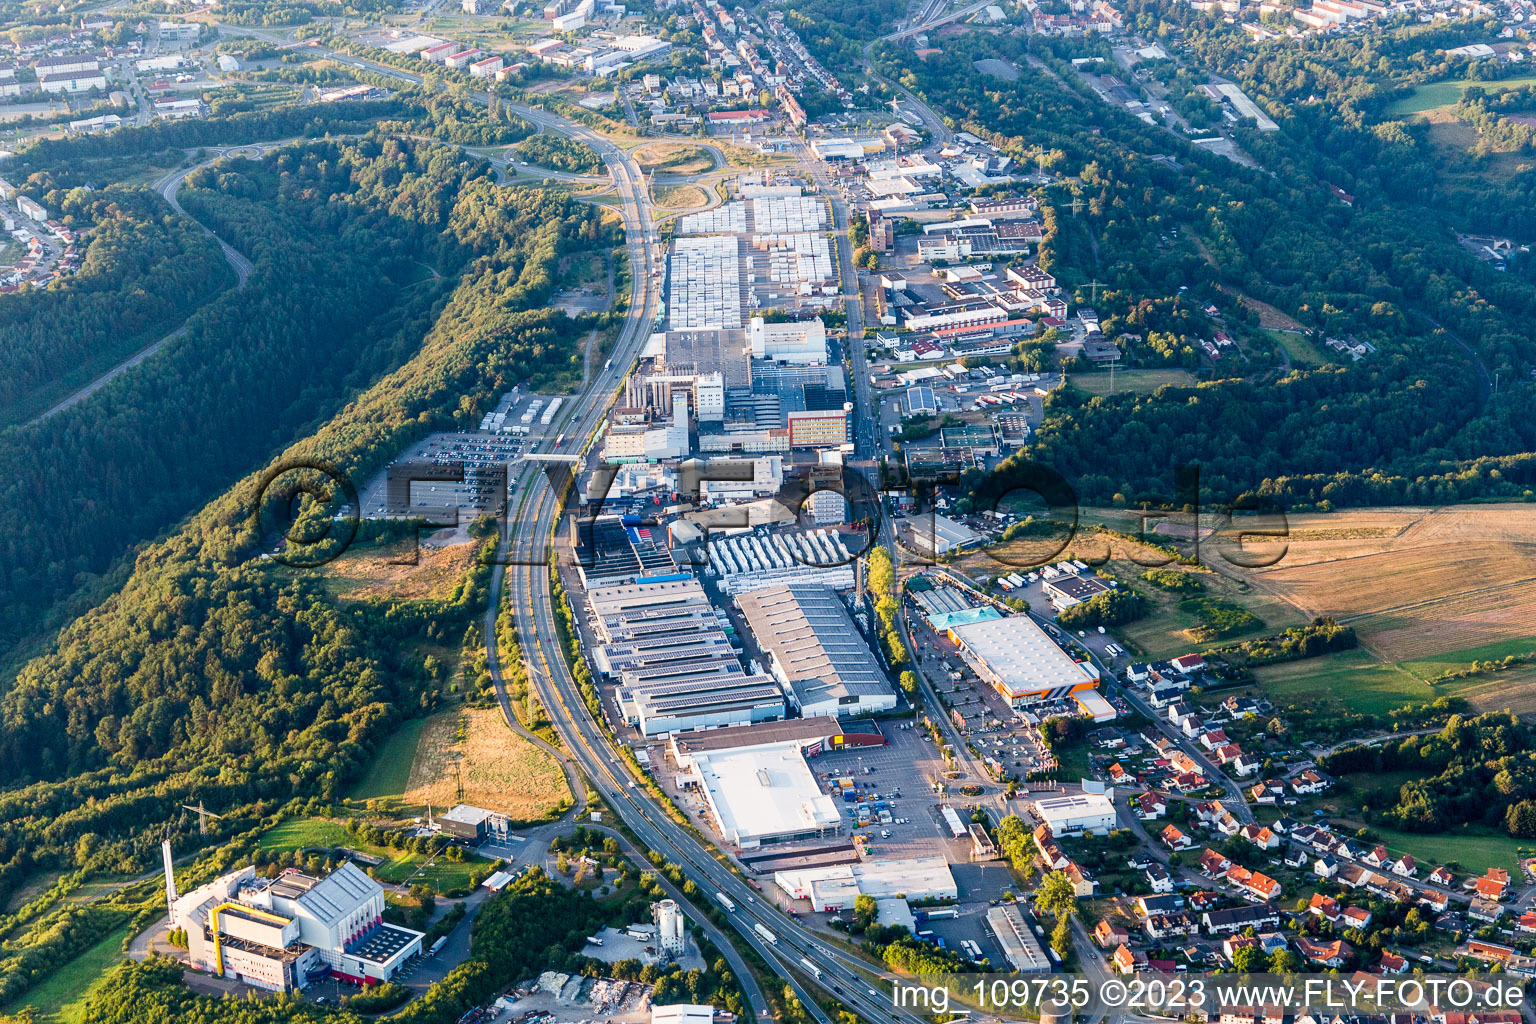 Aerial view of Staffelhof in the state Rhineland-Palatinate, Germany